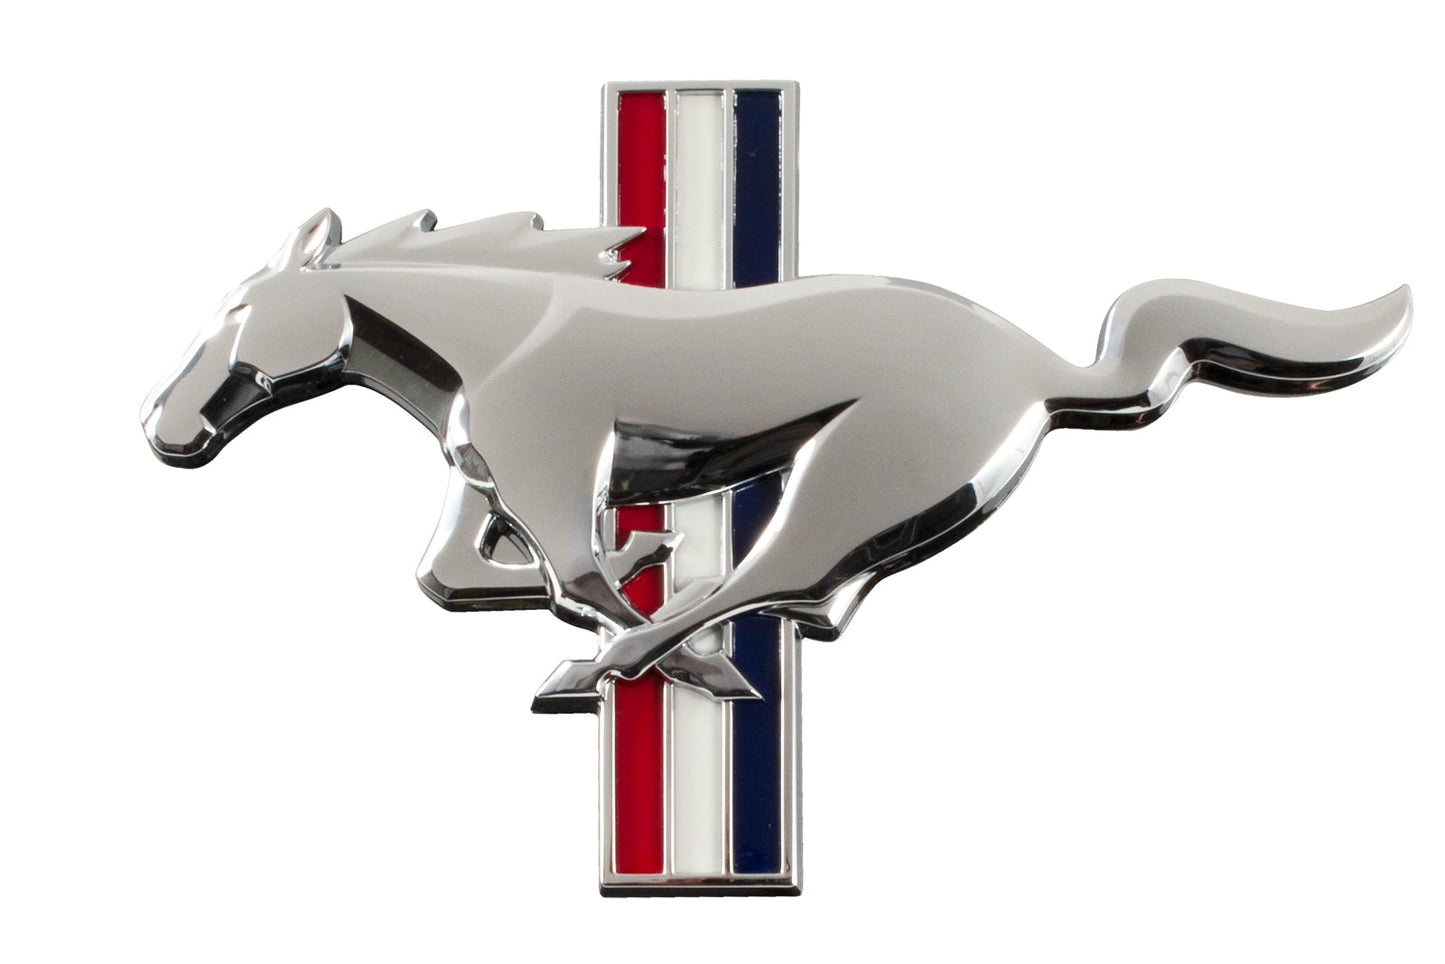 2016-2017 Mustang GT California Special Tribar Running Horse Grille Emblem